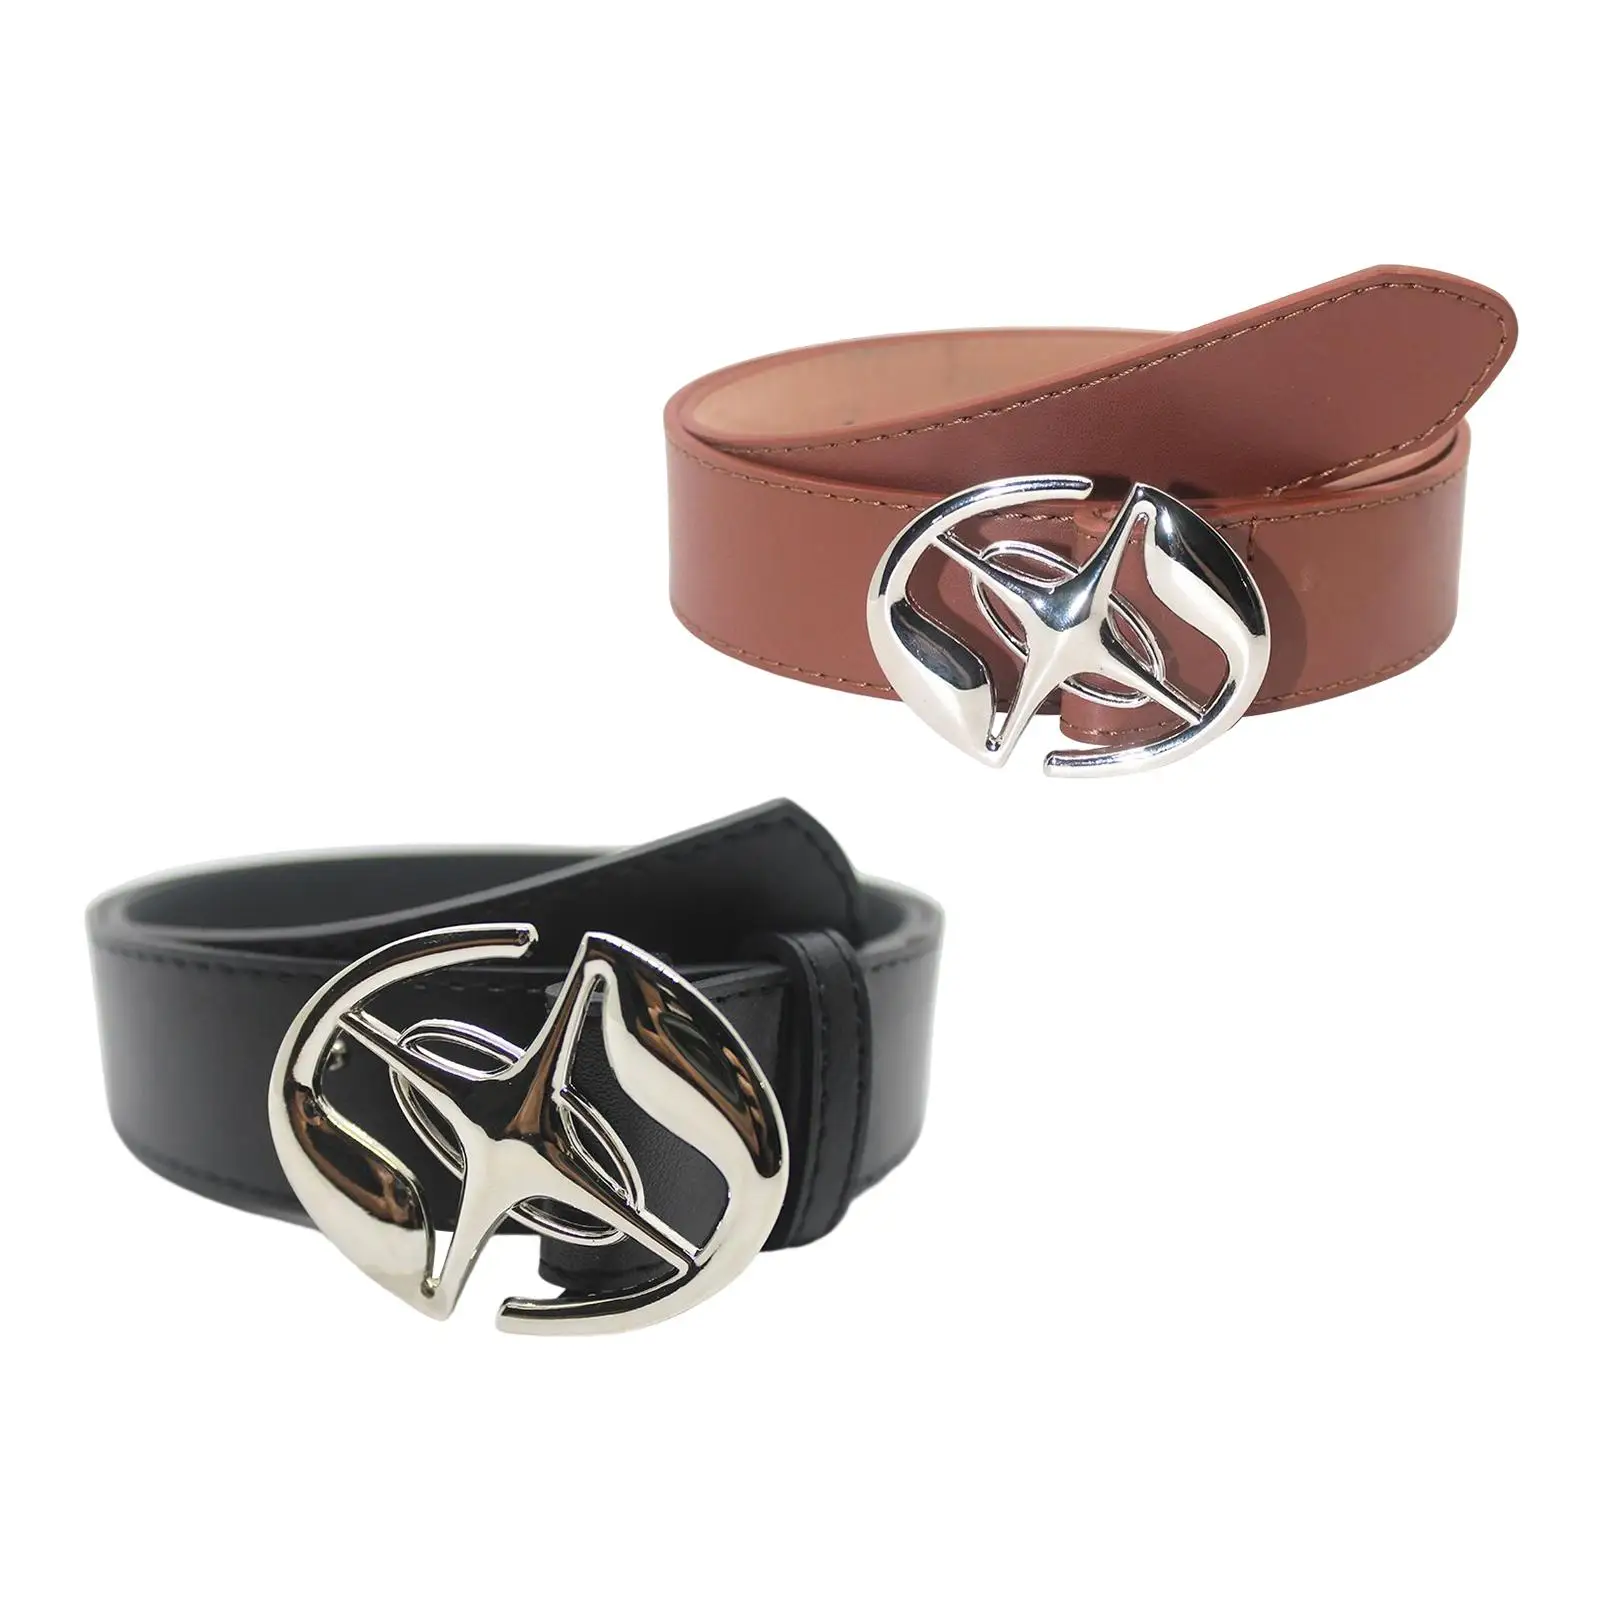 PU Leather Belt for Men Women Ladies Belts with Pin Buckle Casual Dress Waist Belt Versatile Decorative Belt for Jackets Pants